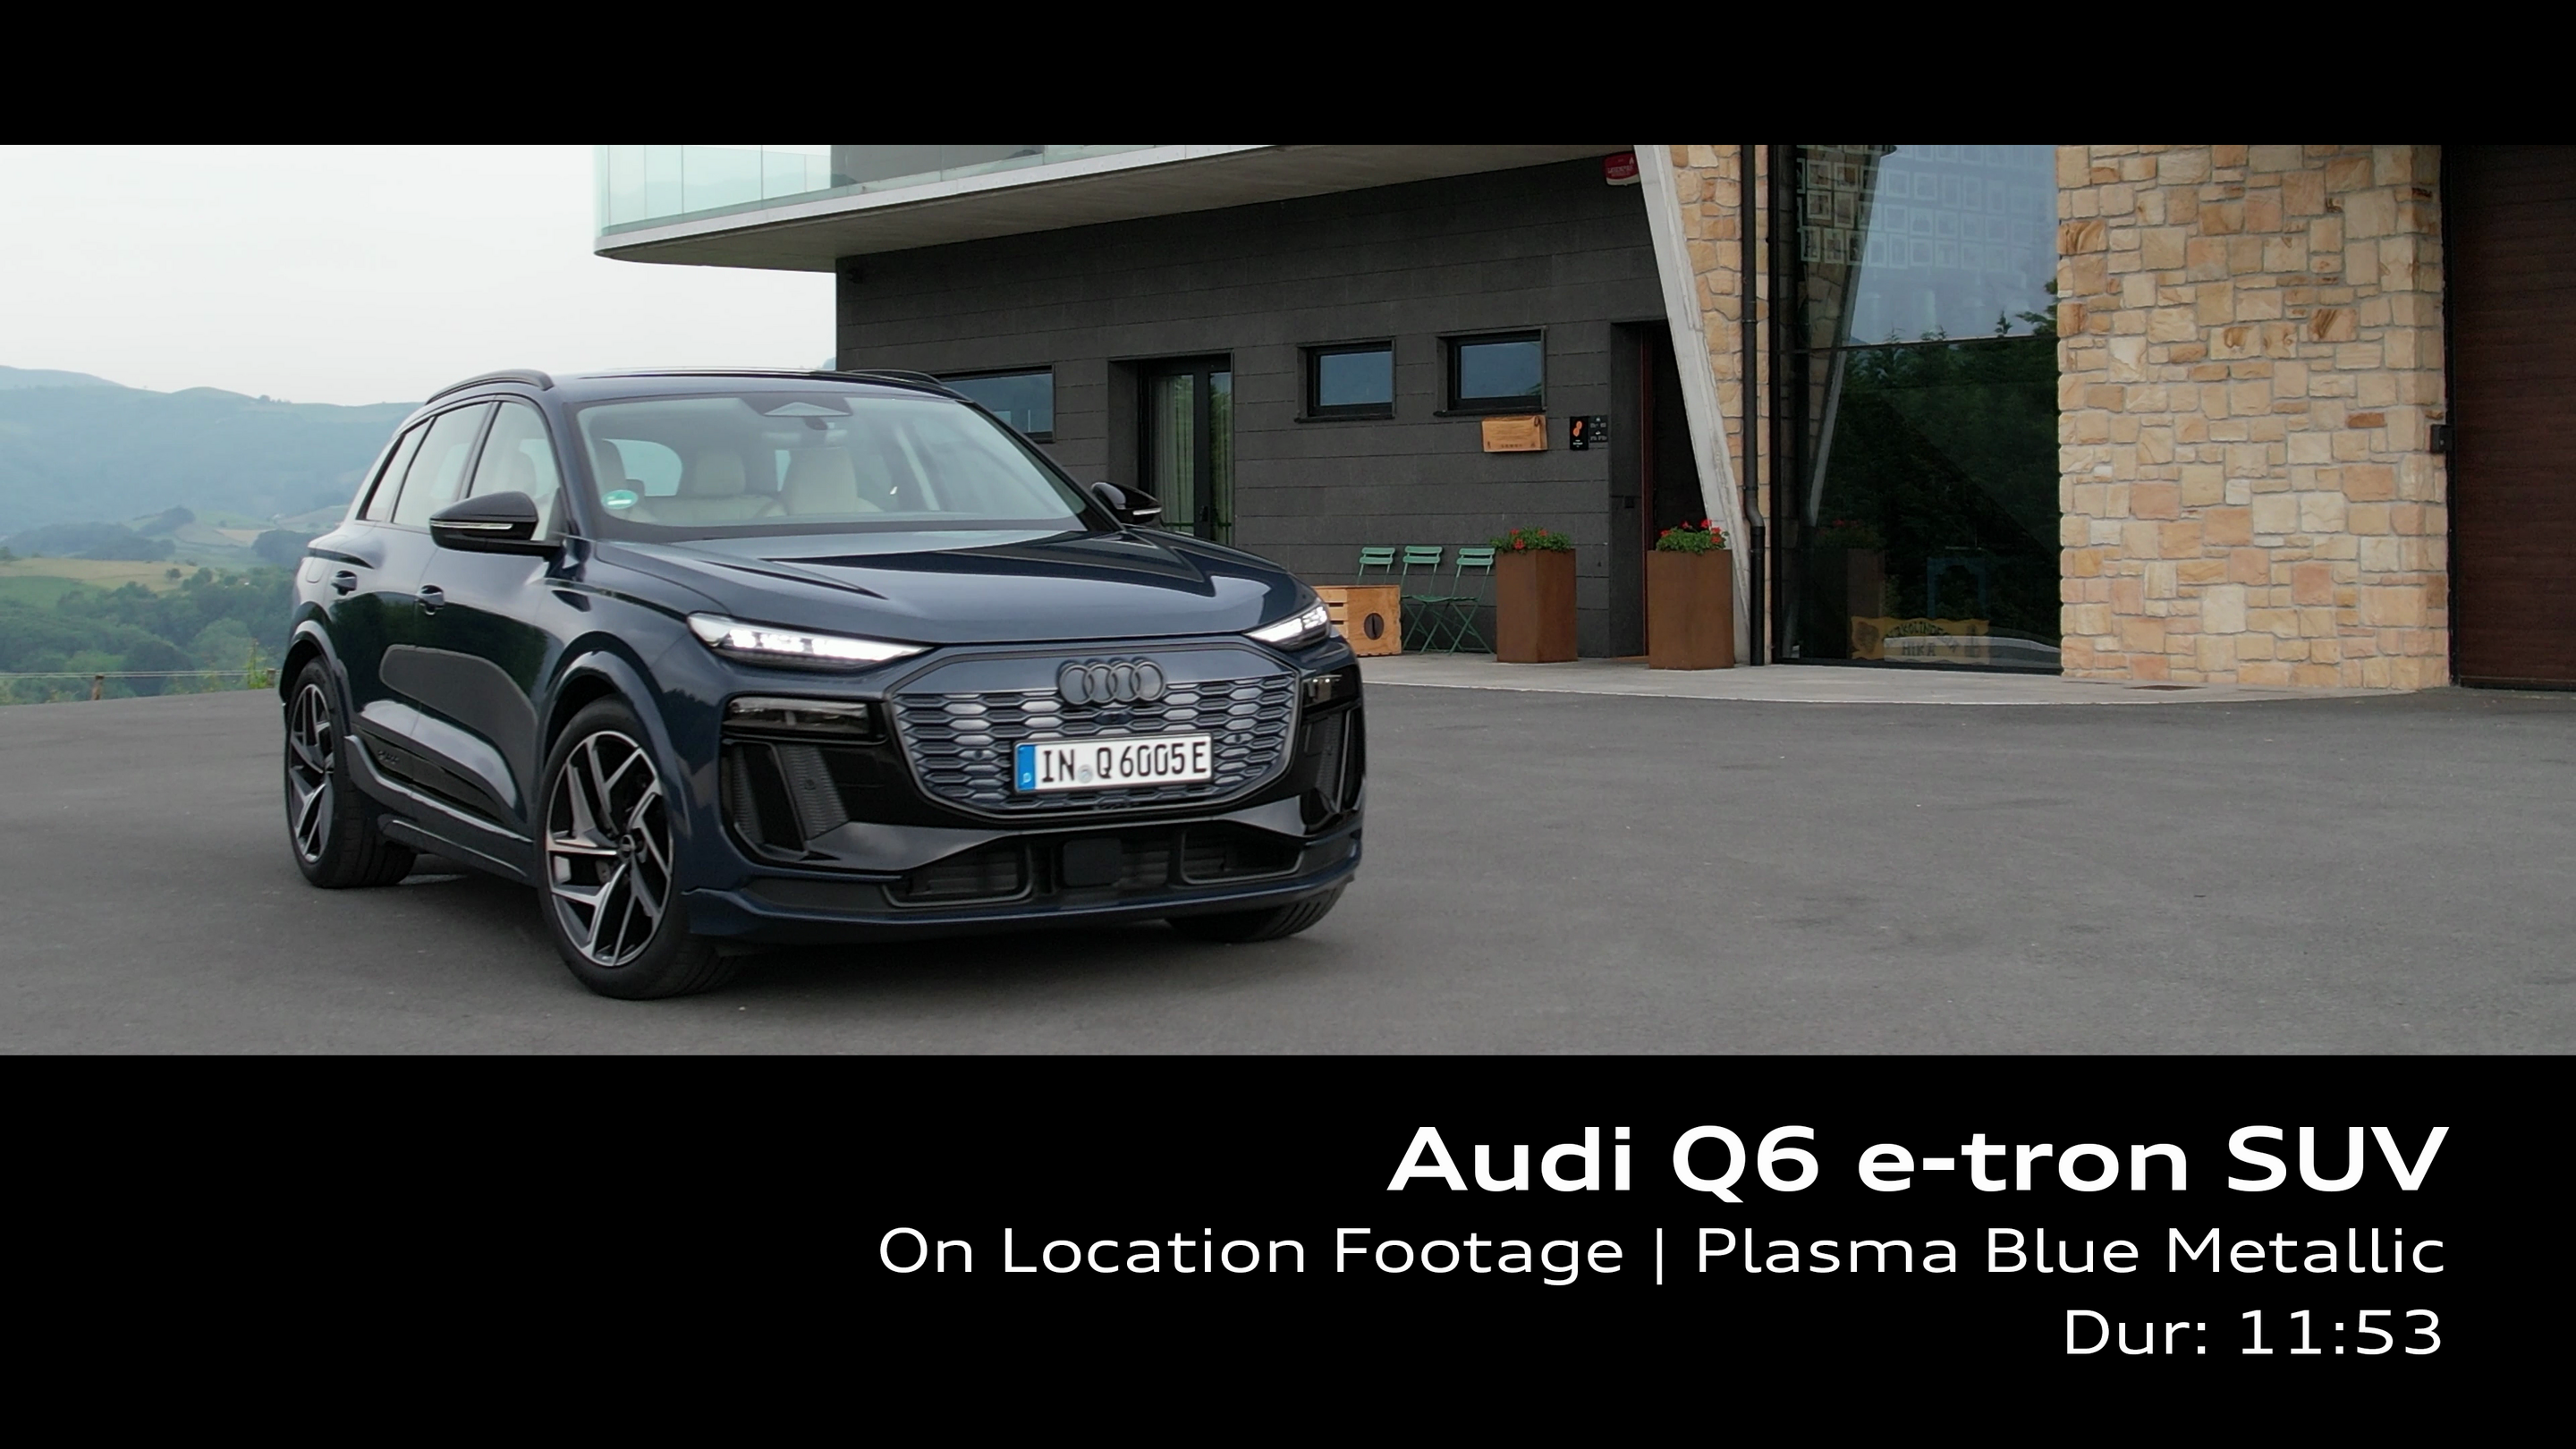 Audi Q6 e-tron SUV Plasma blue metallic - Footage (on location)